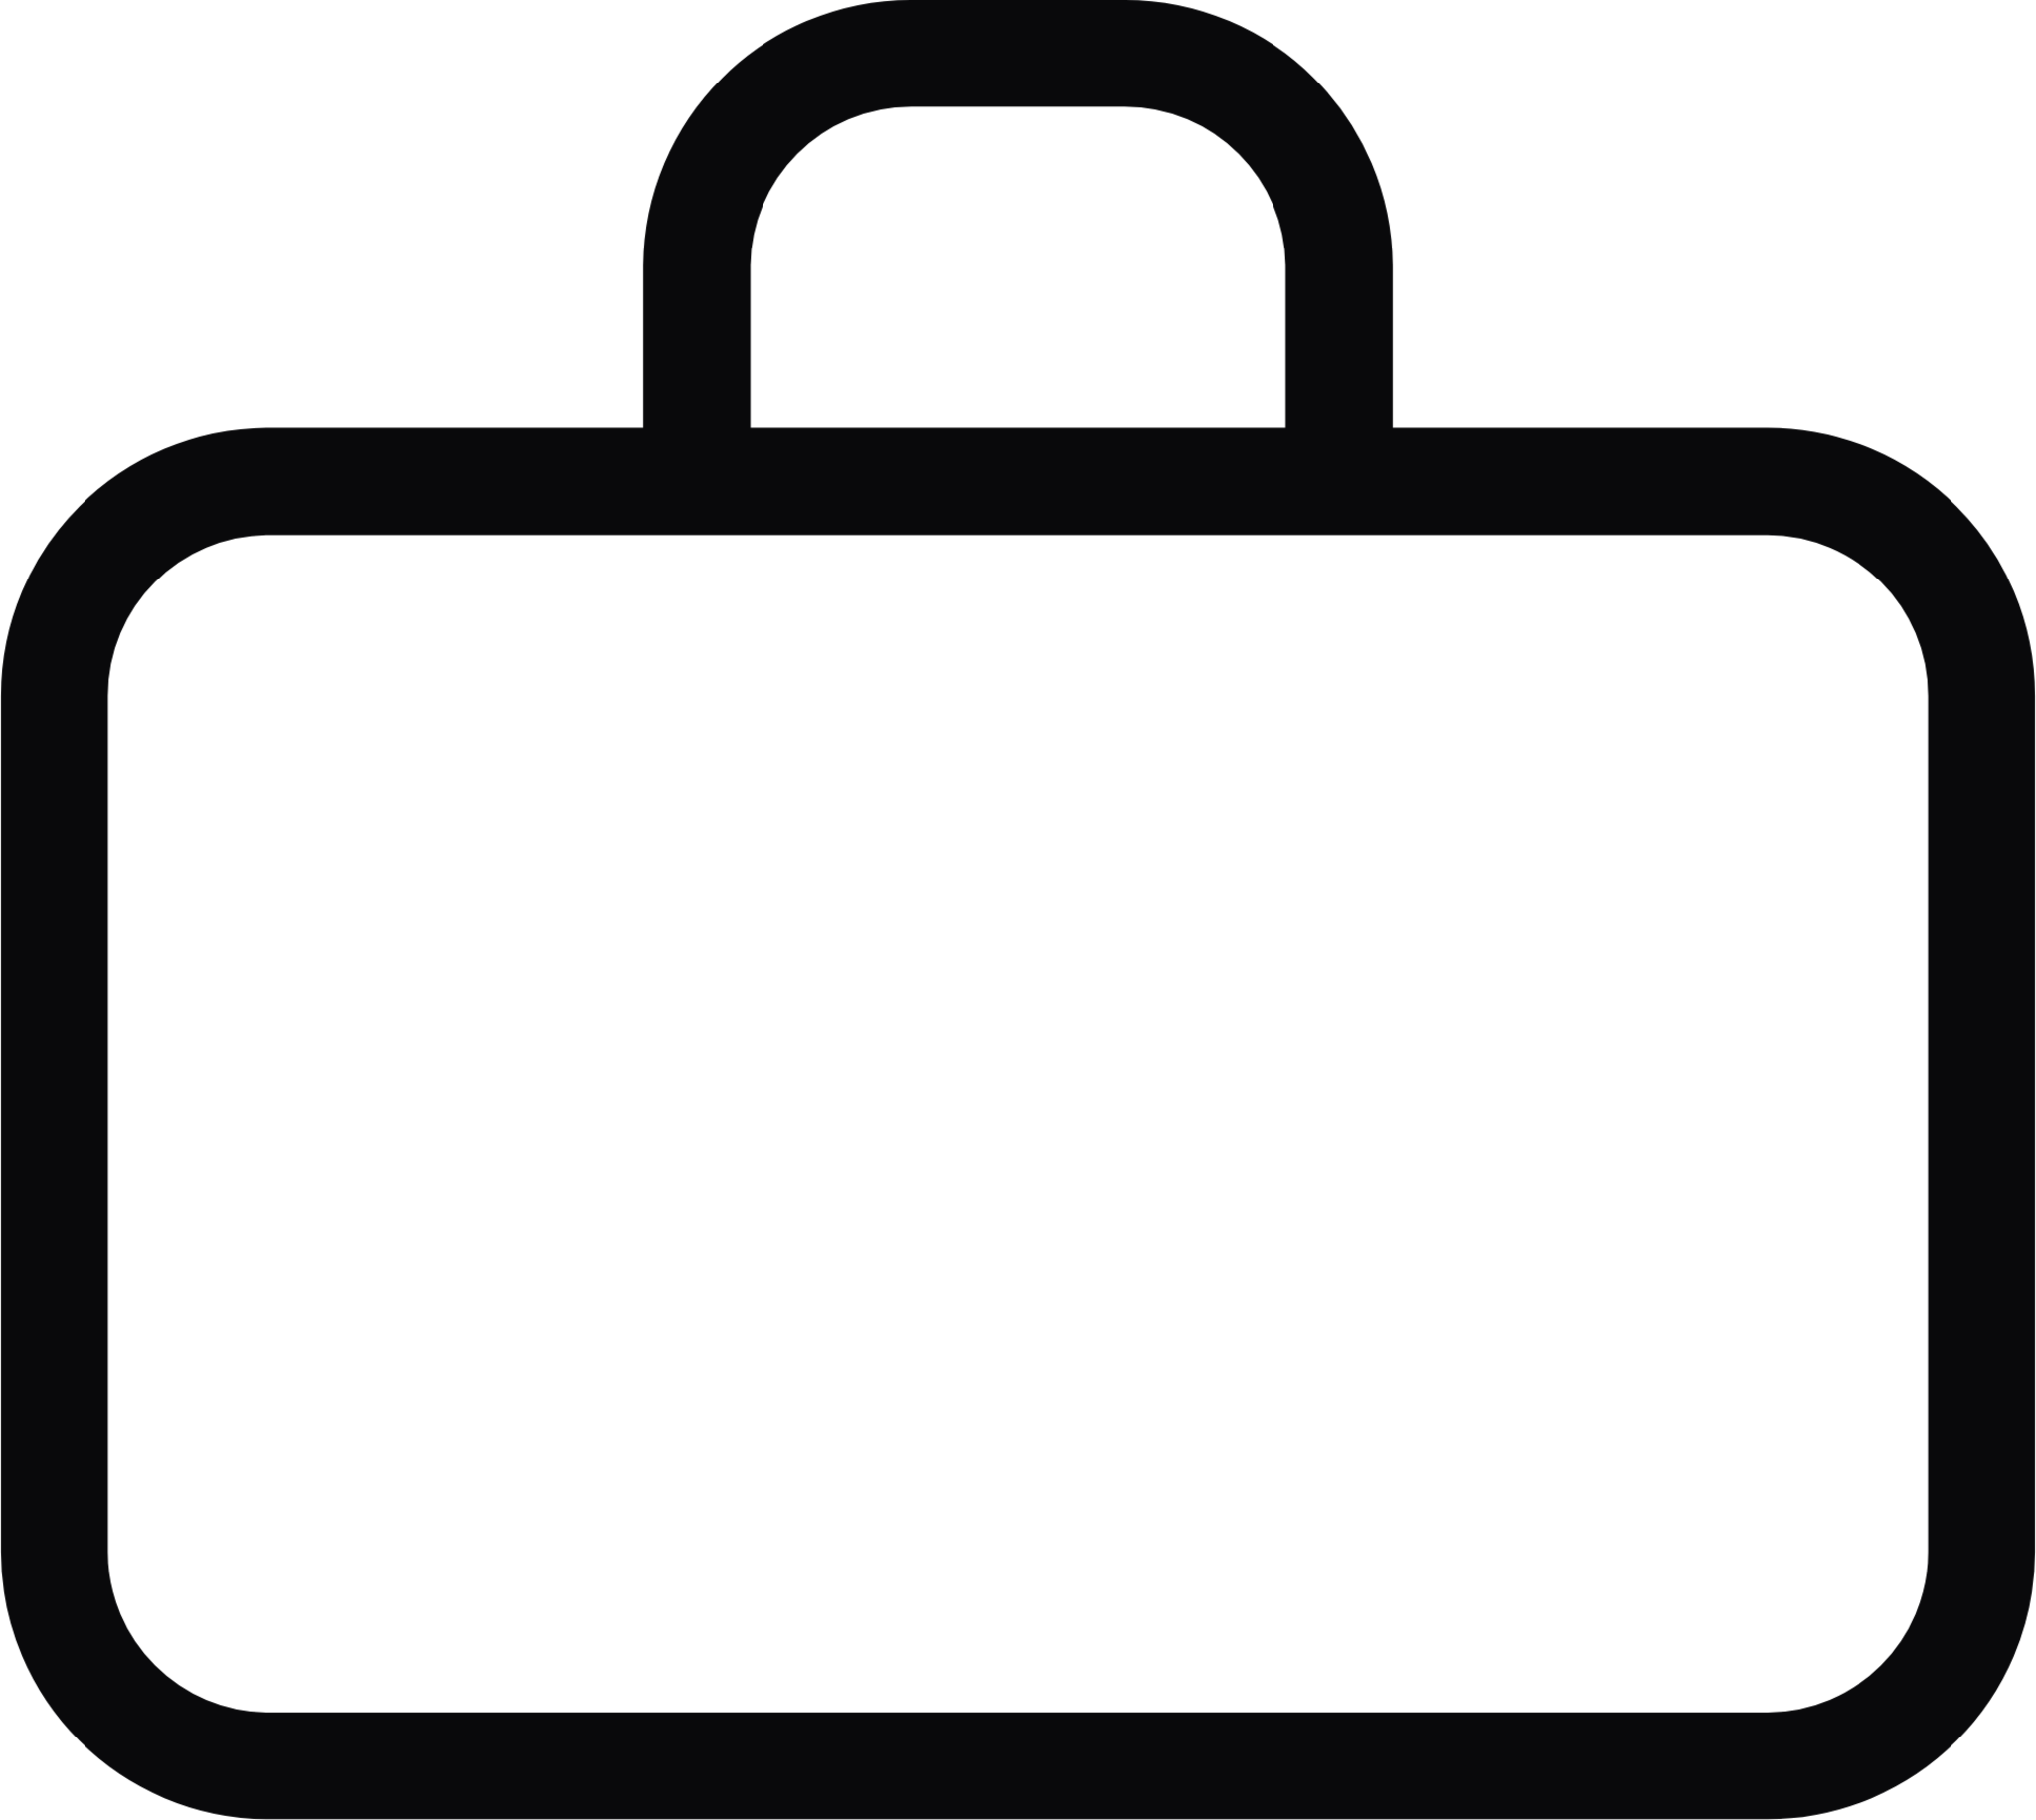 hand suitcase icon